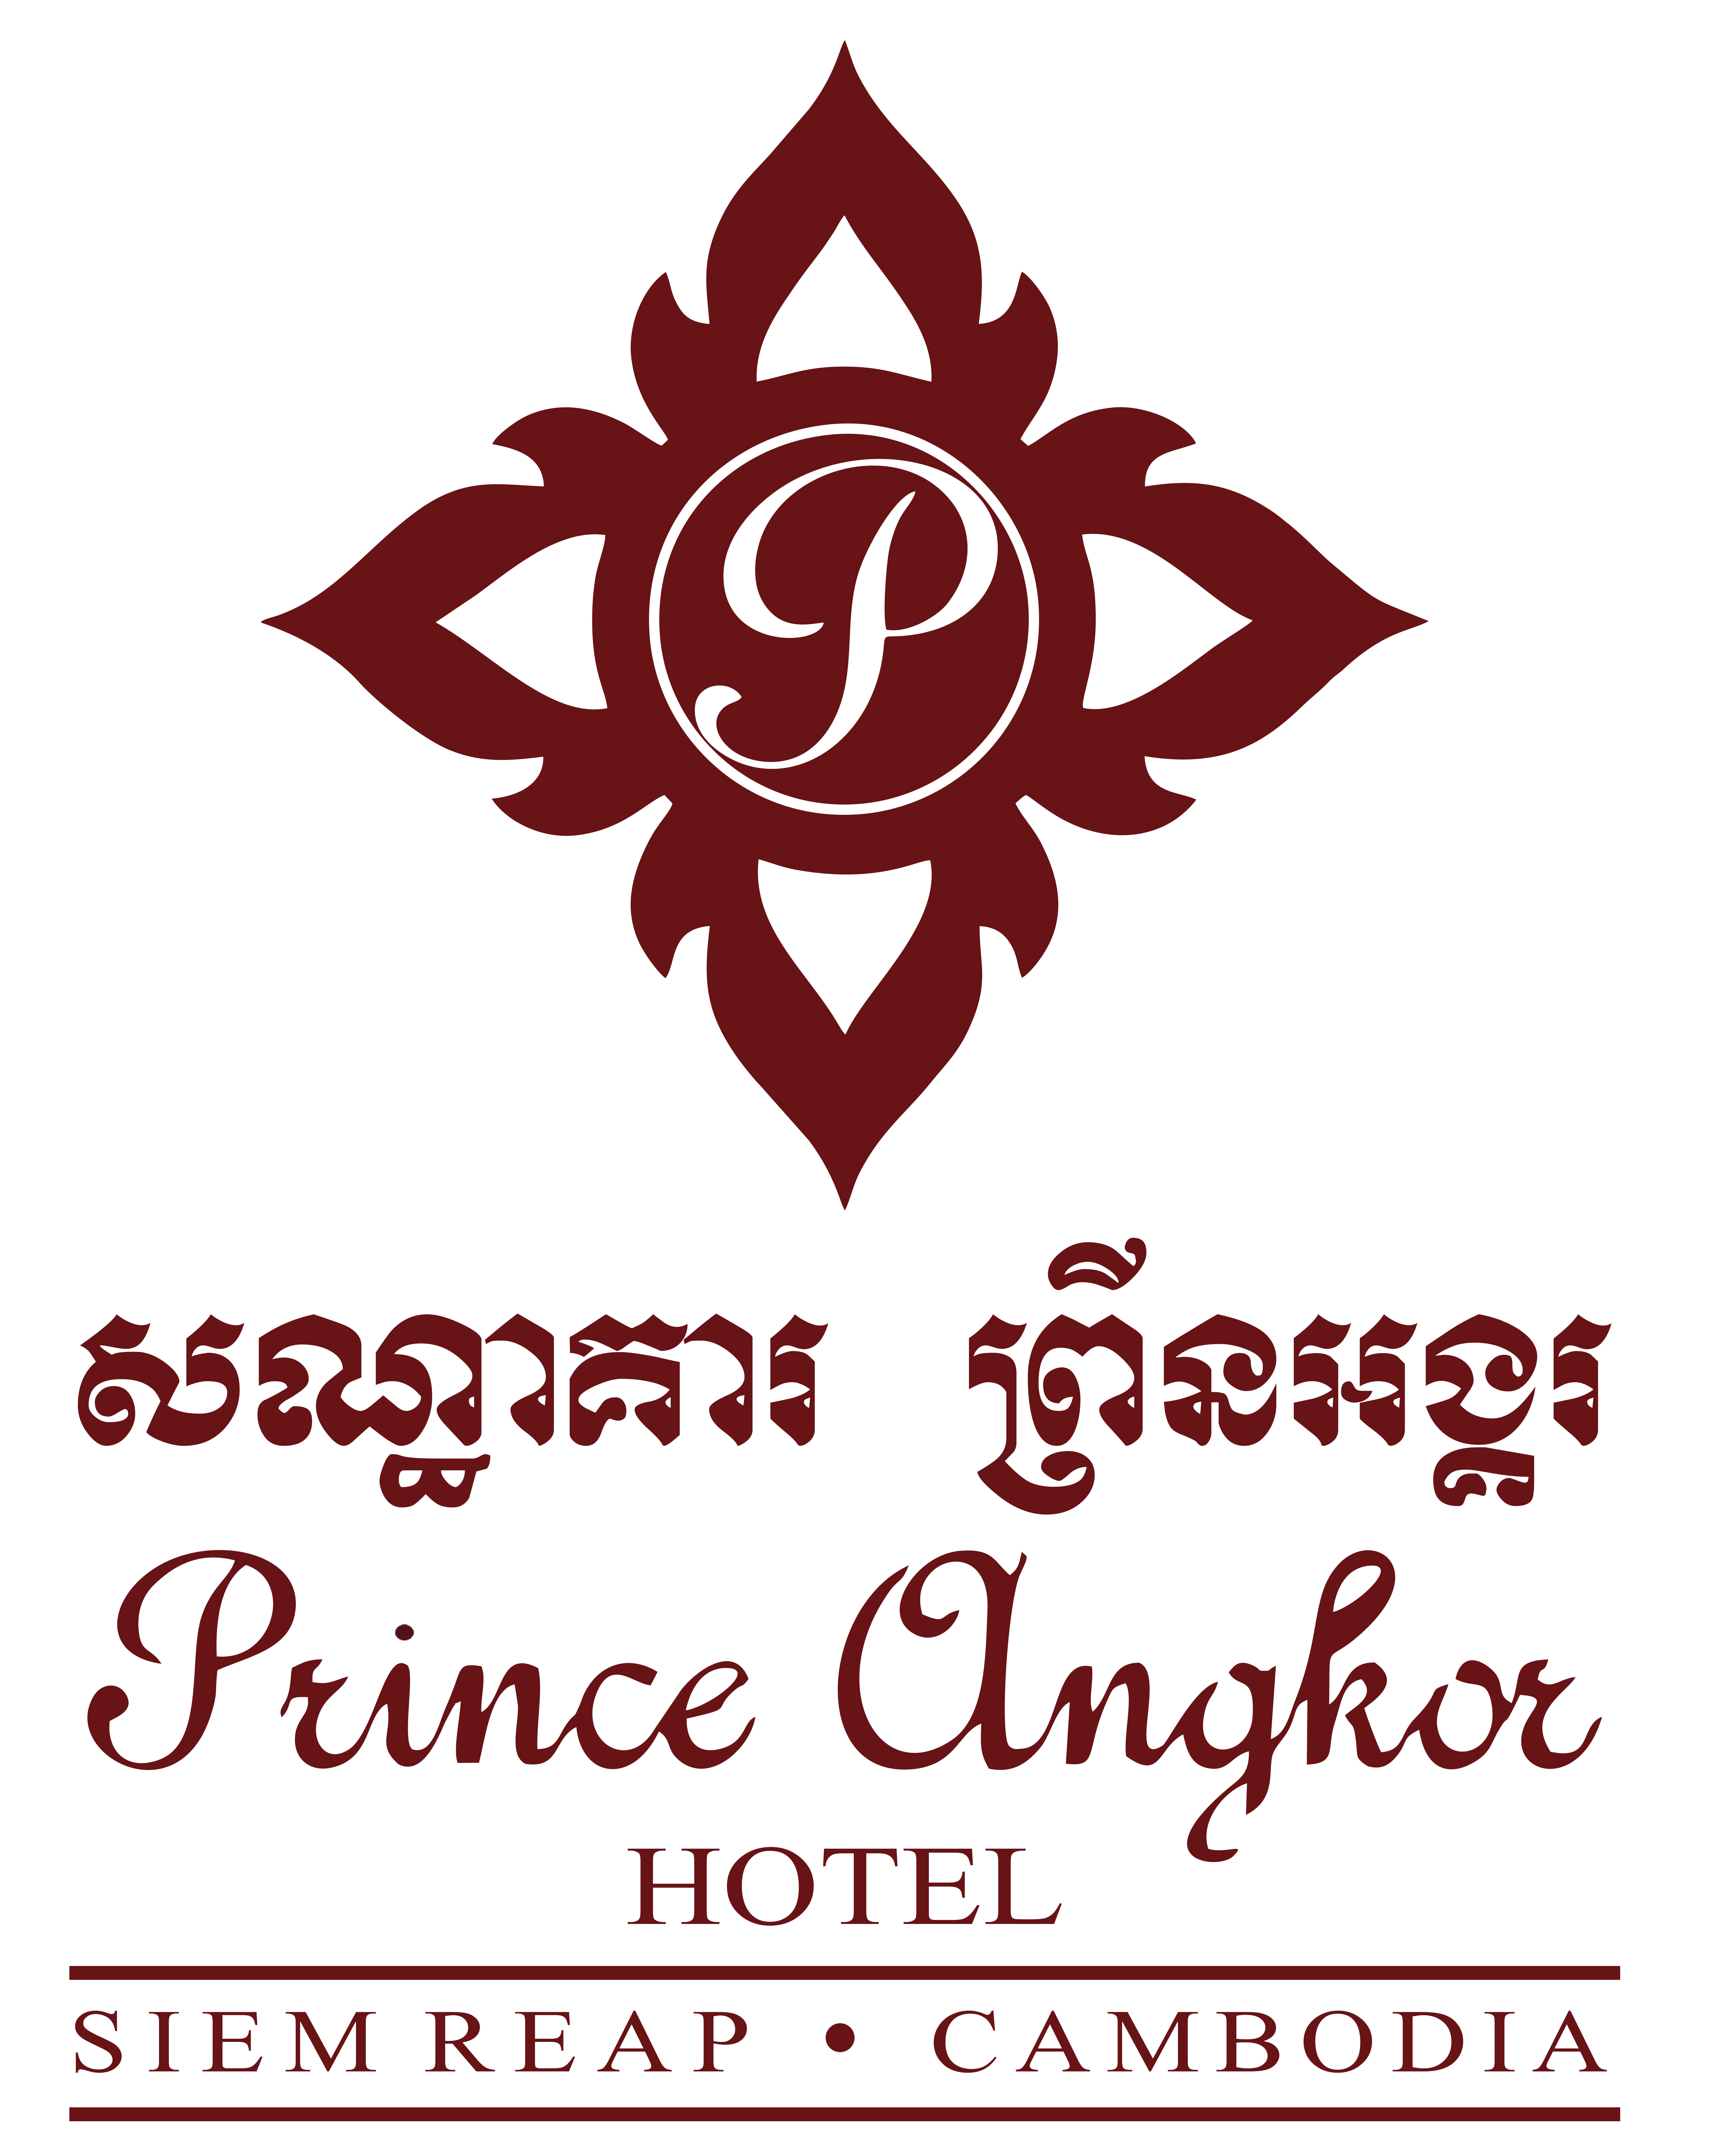 https://www.princeangkor.com